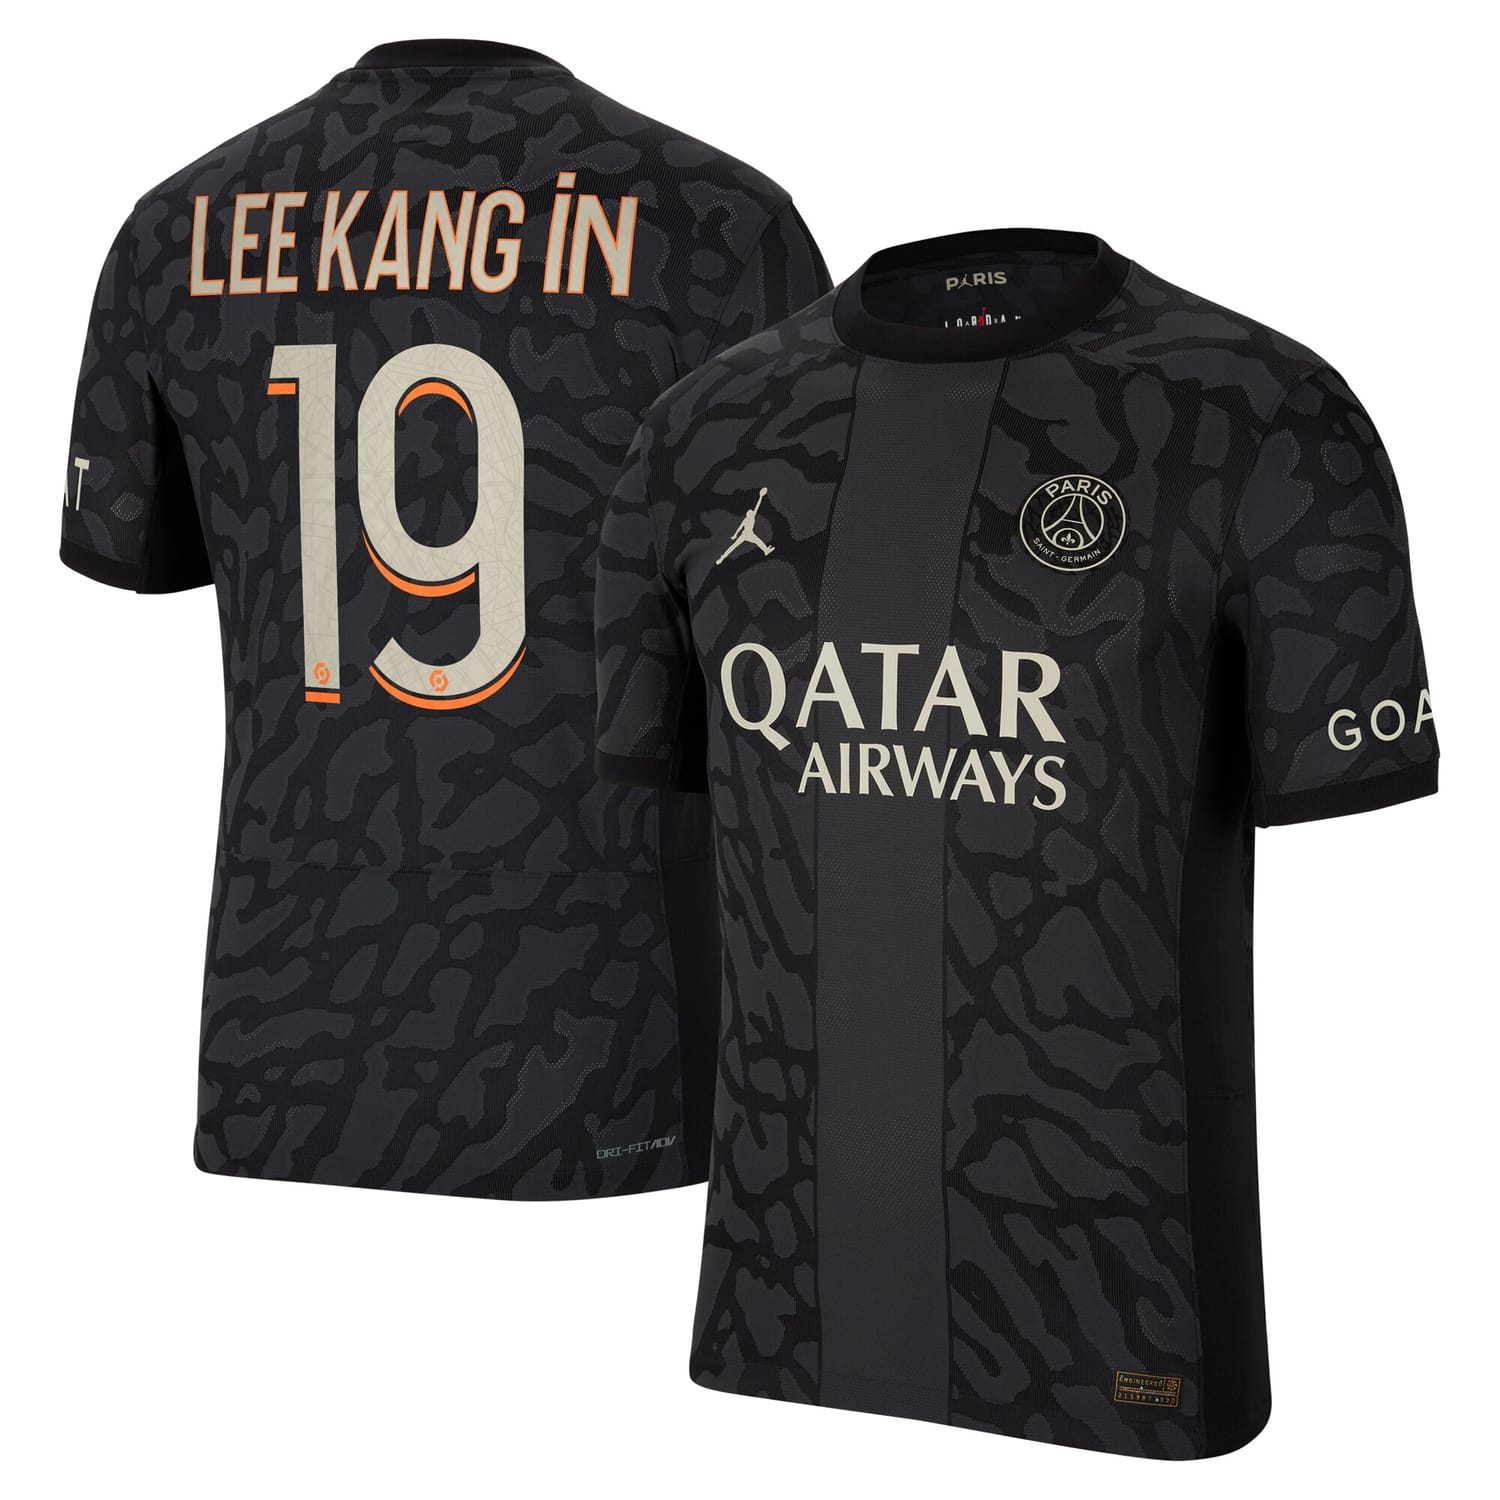 Ligue 1 Paris Saint-Germain Third Authentic Jersey Shirt 2023-24 player Lee Kang In 19 printing for Men